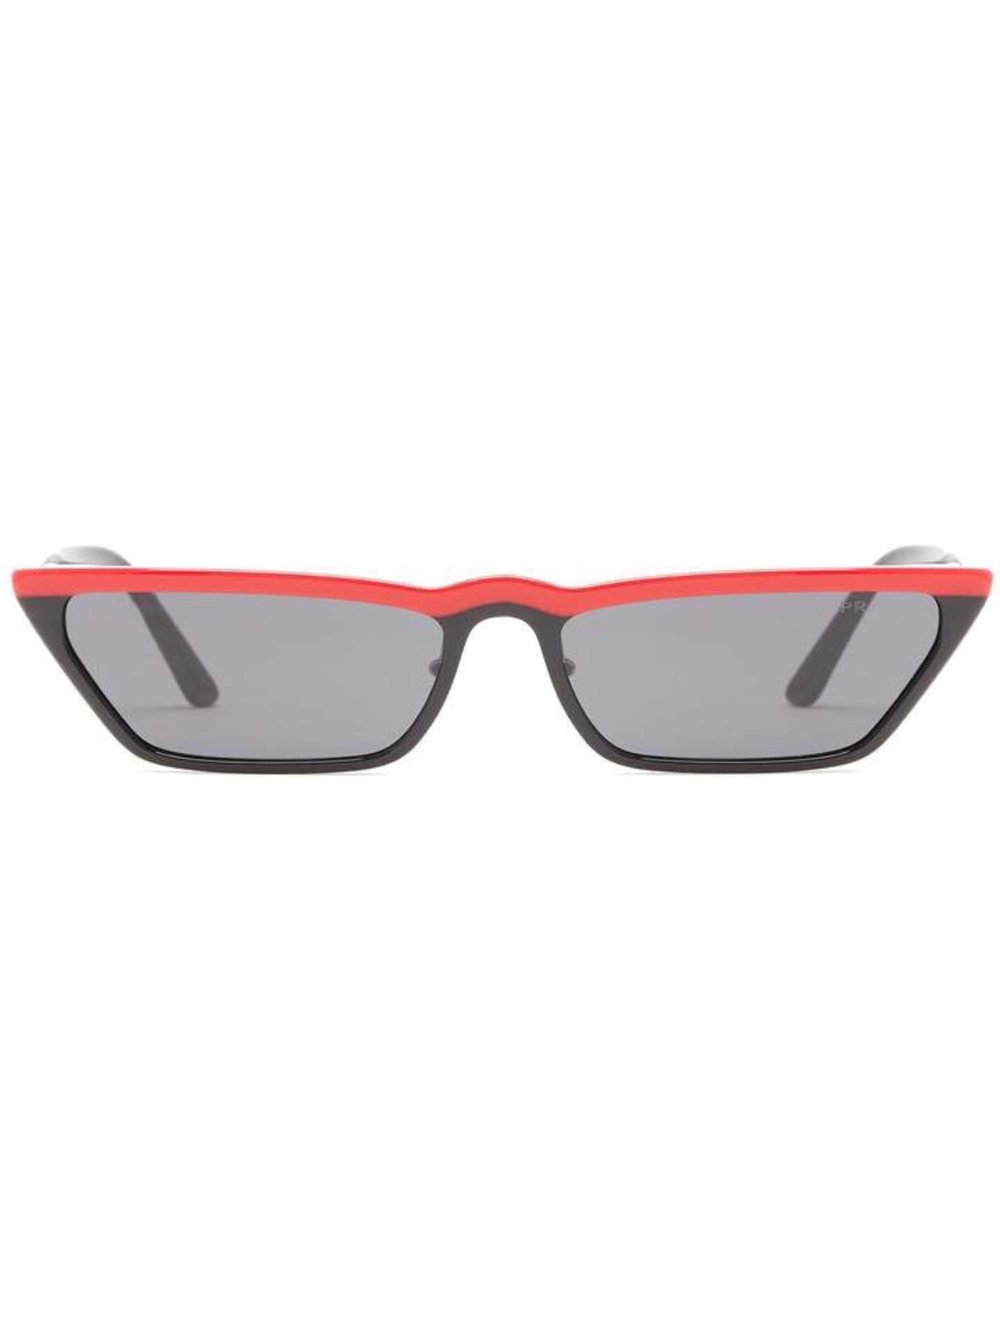 Image of Prada Cat Eye Sunglasses